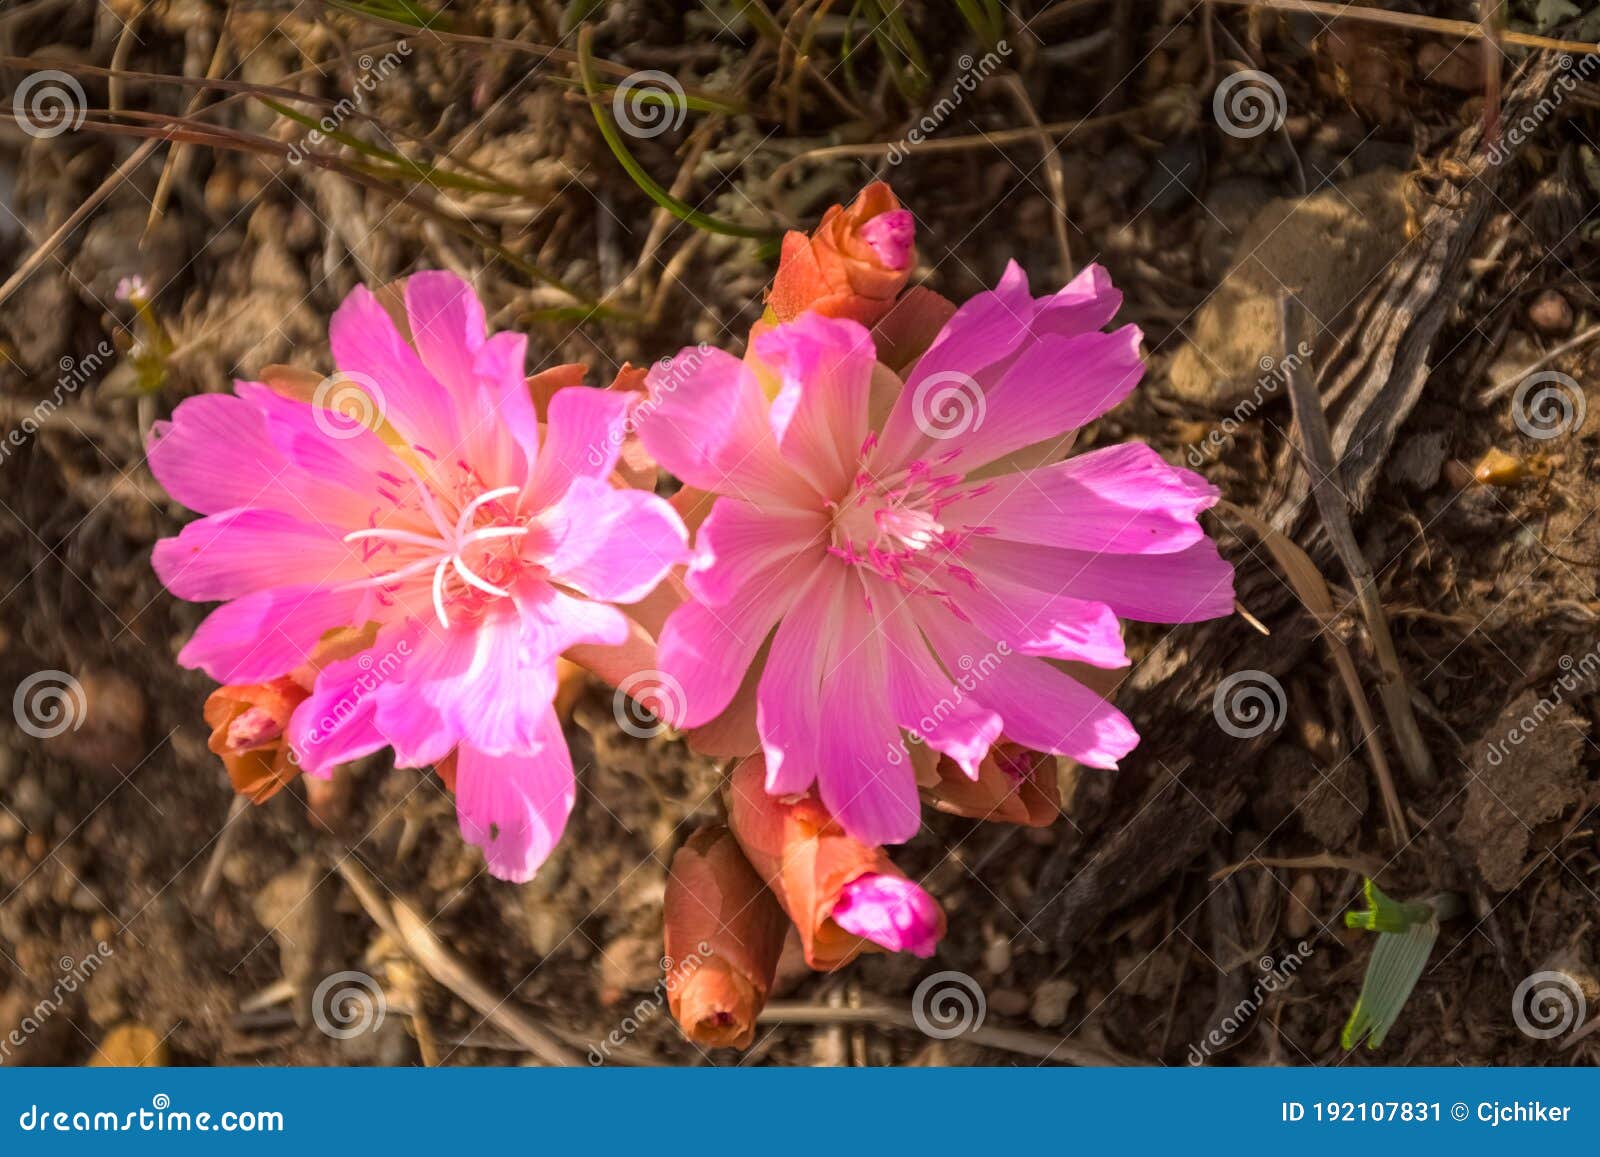 bitterroot lewisia rediviva pink wildflowers